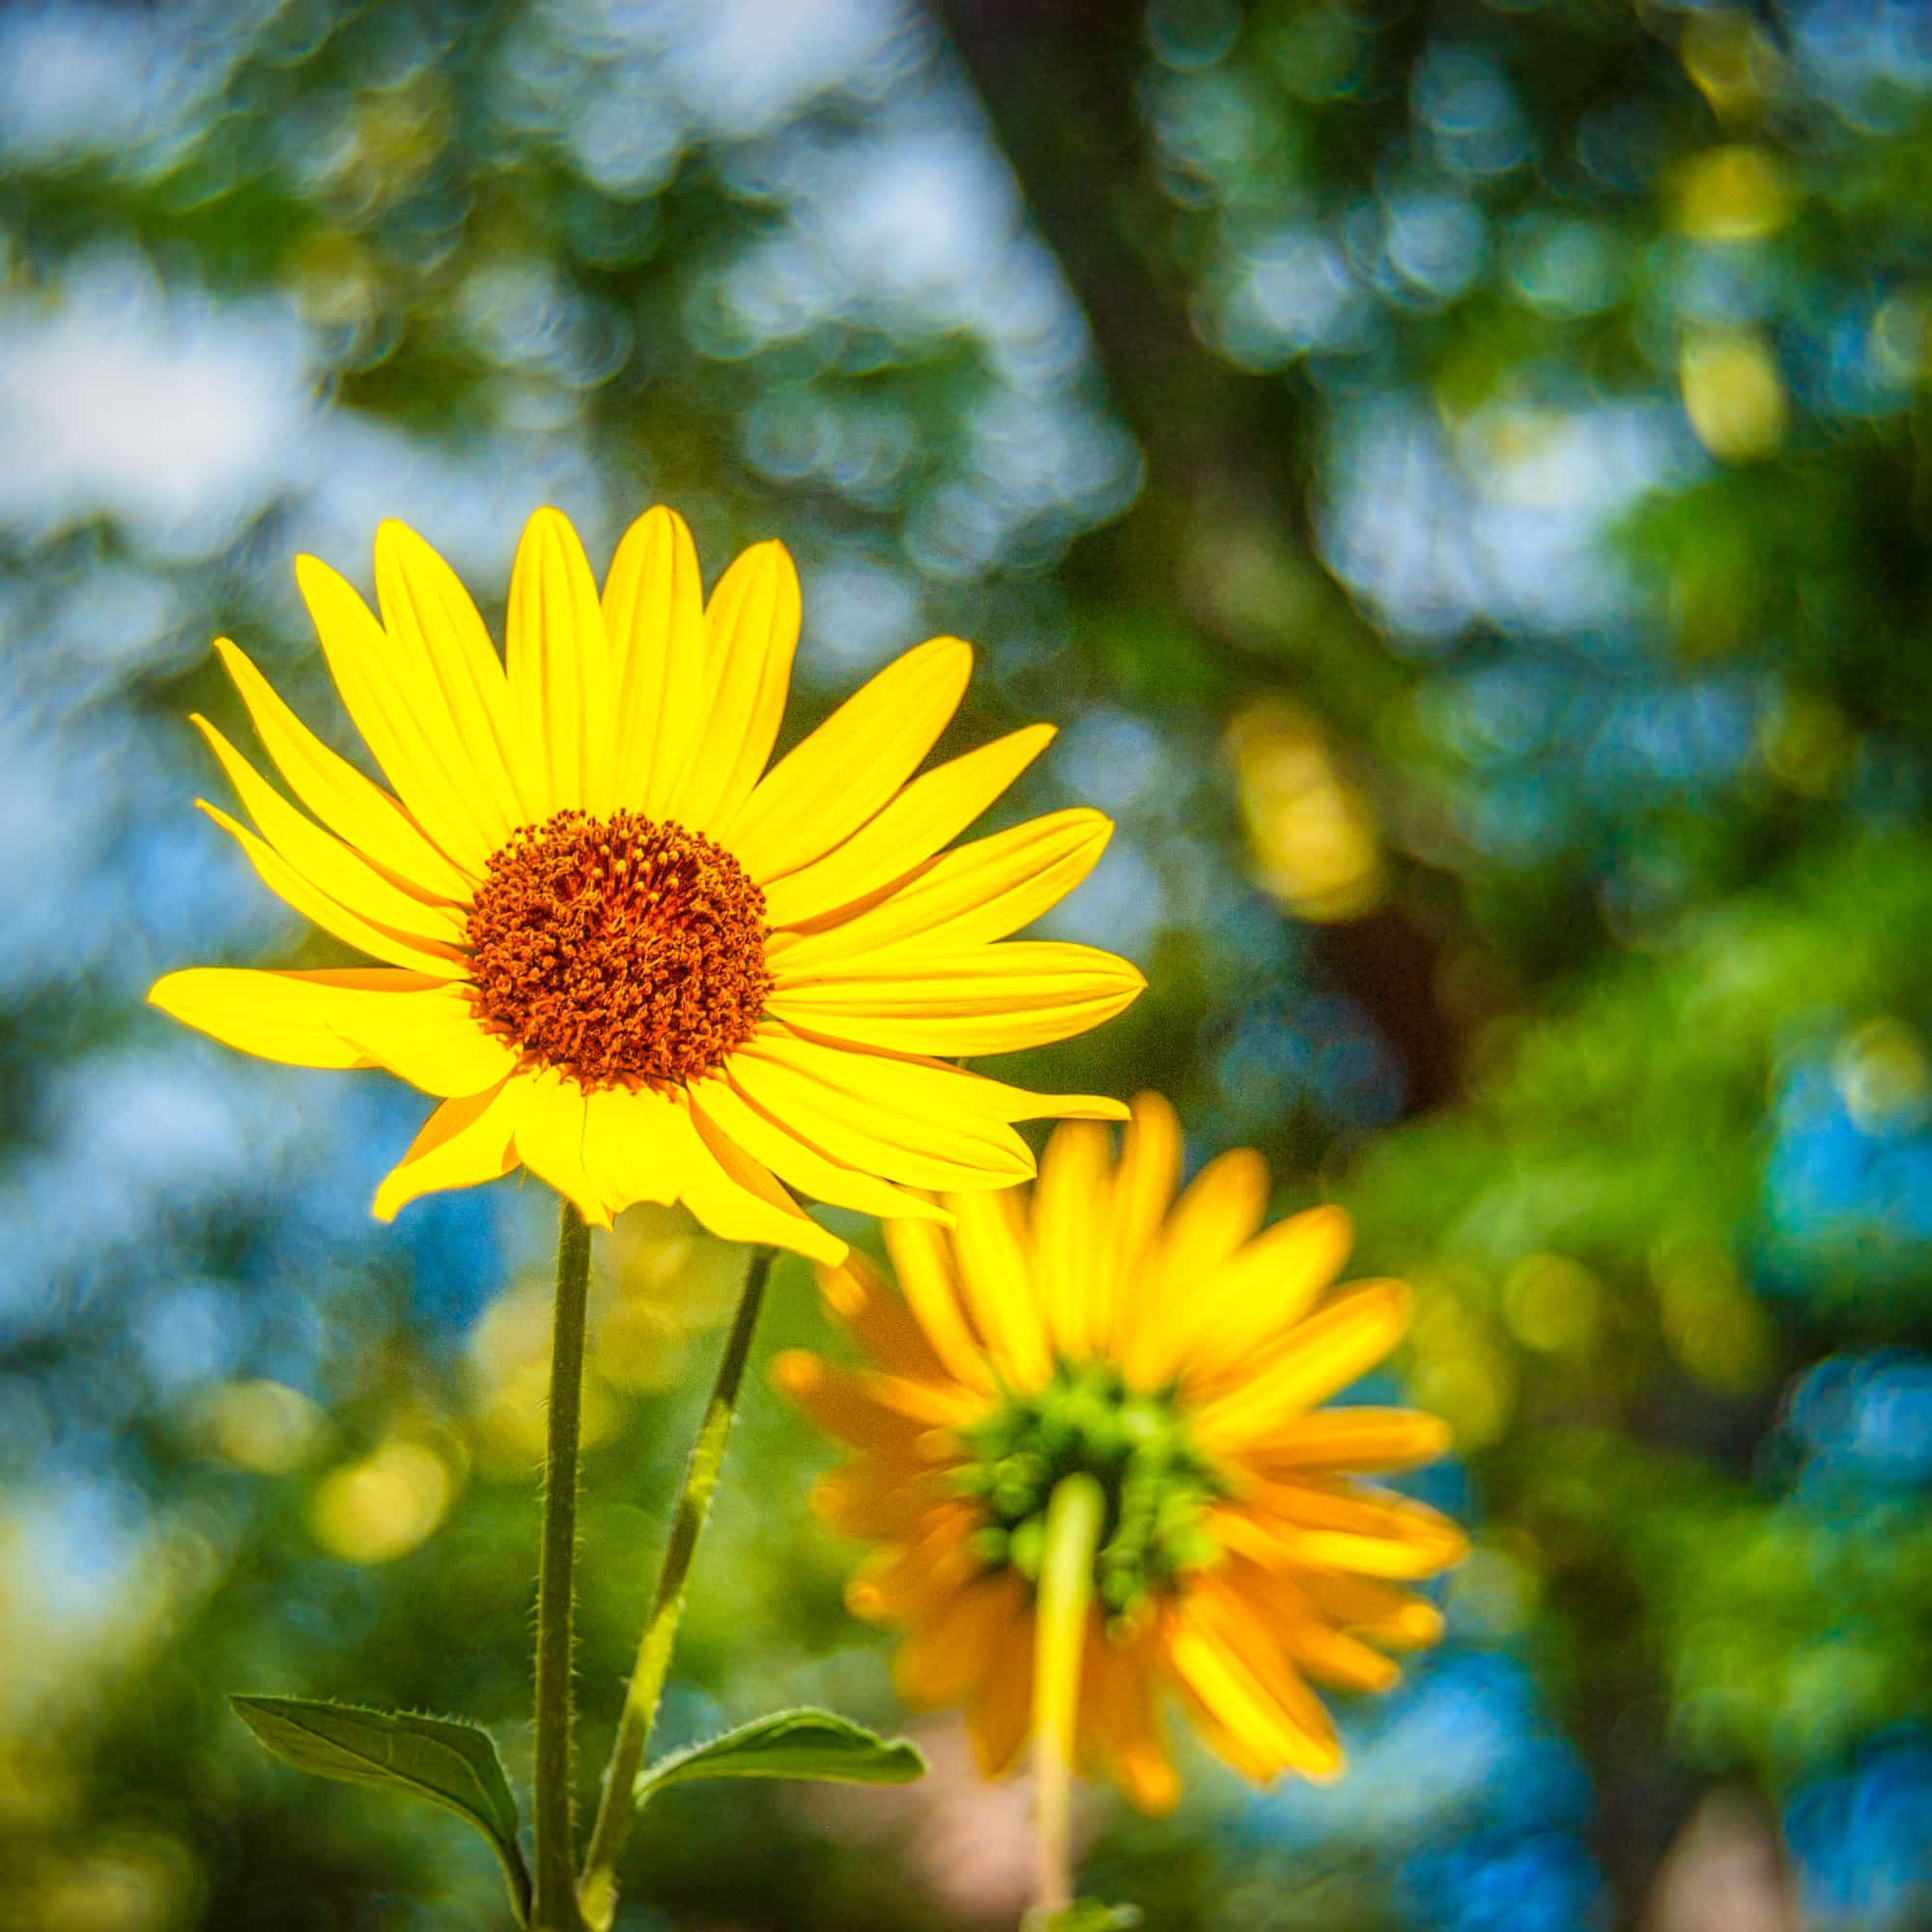 Two volunteer sunflowers grow along the sidewalk in the Mapleton Hill Neighborhood of Boulder, Colorado.